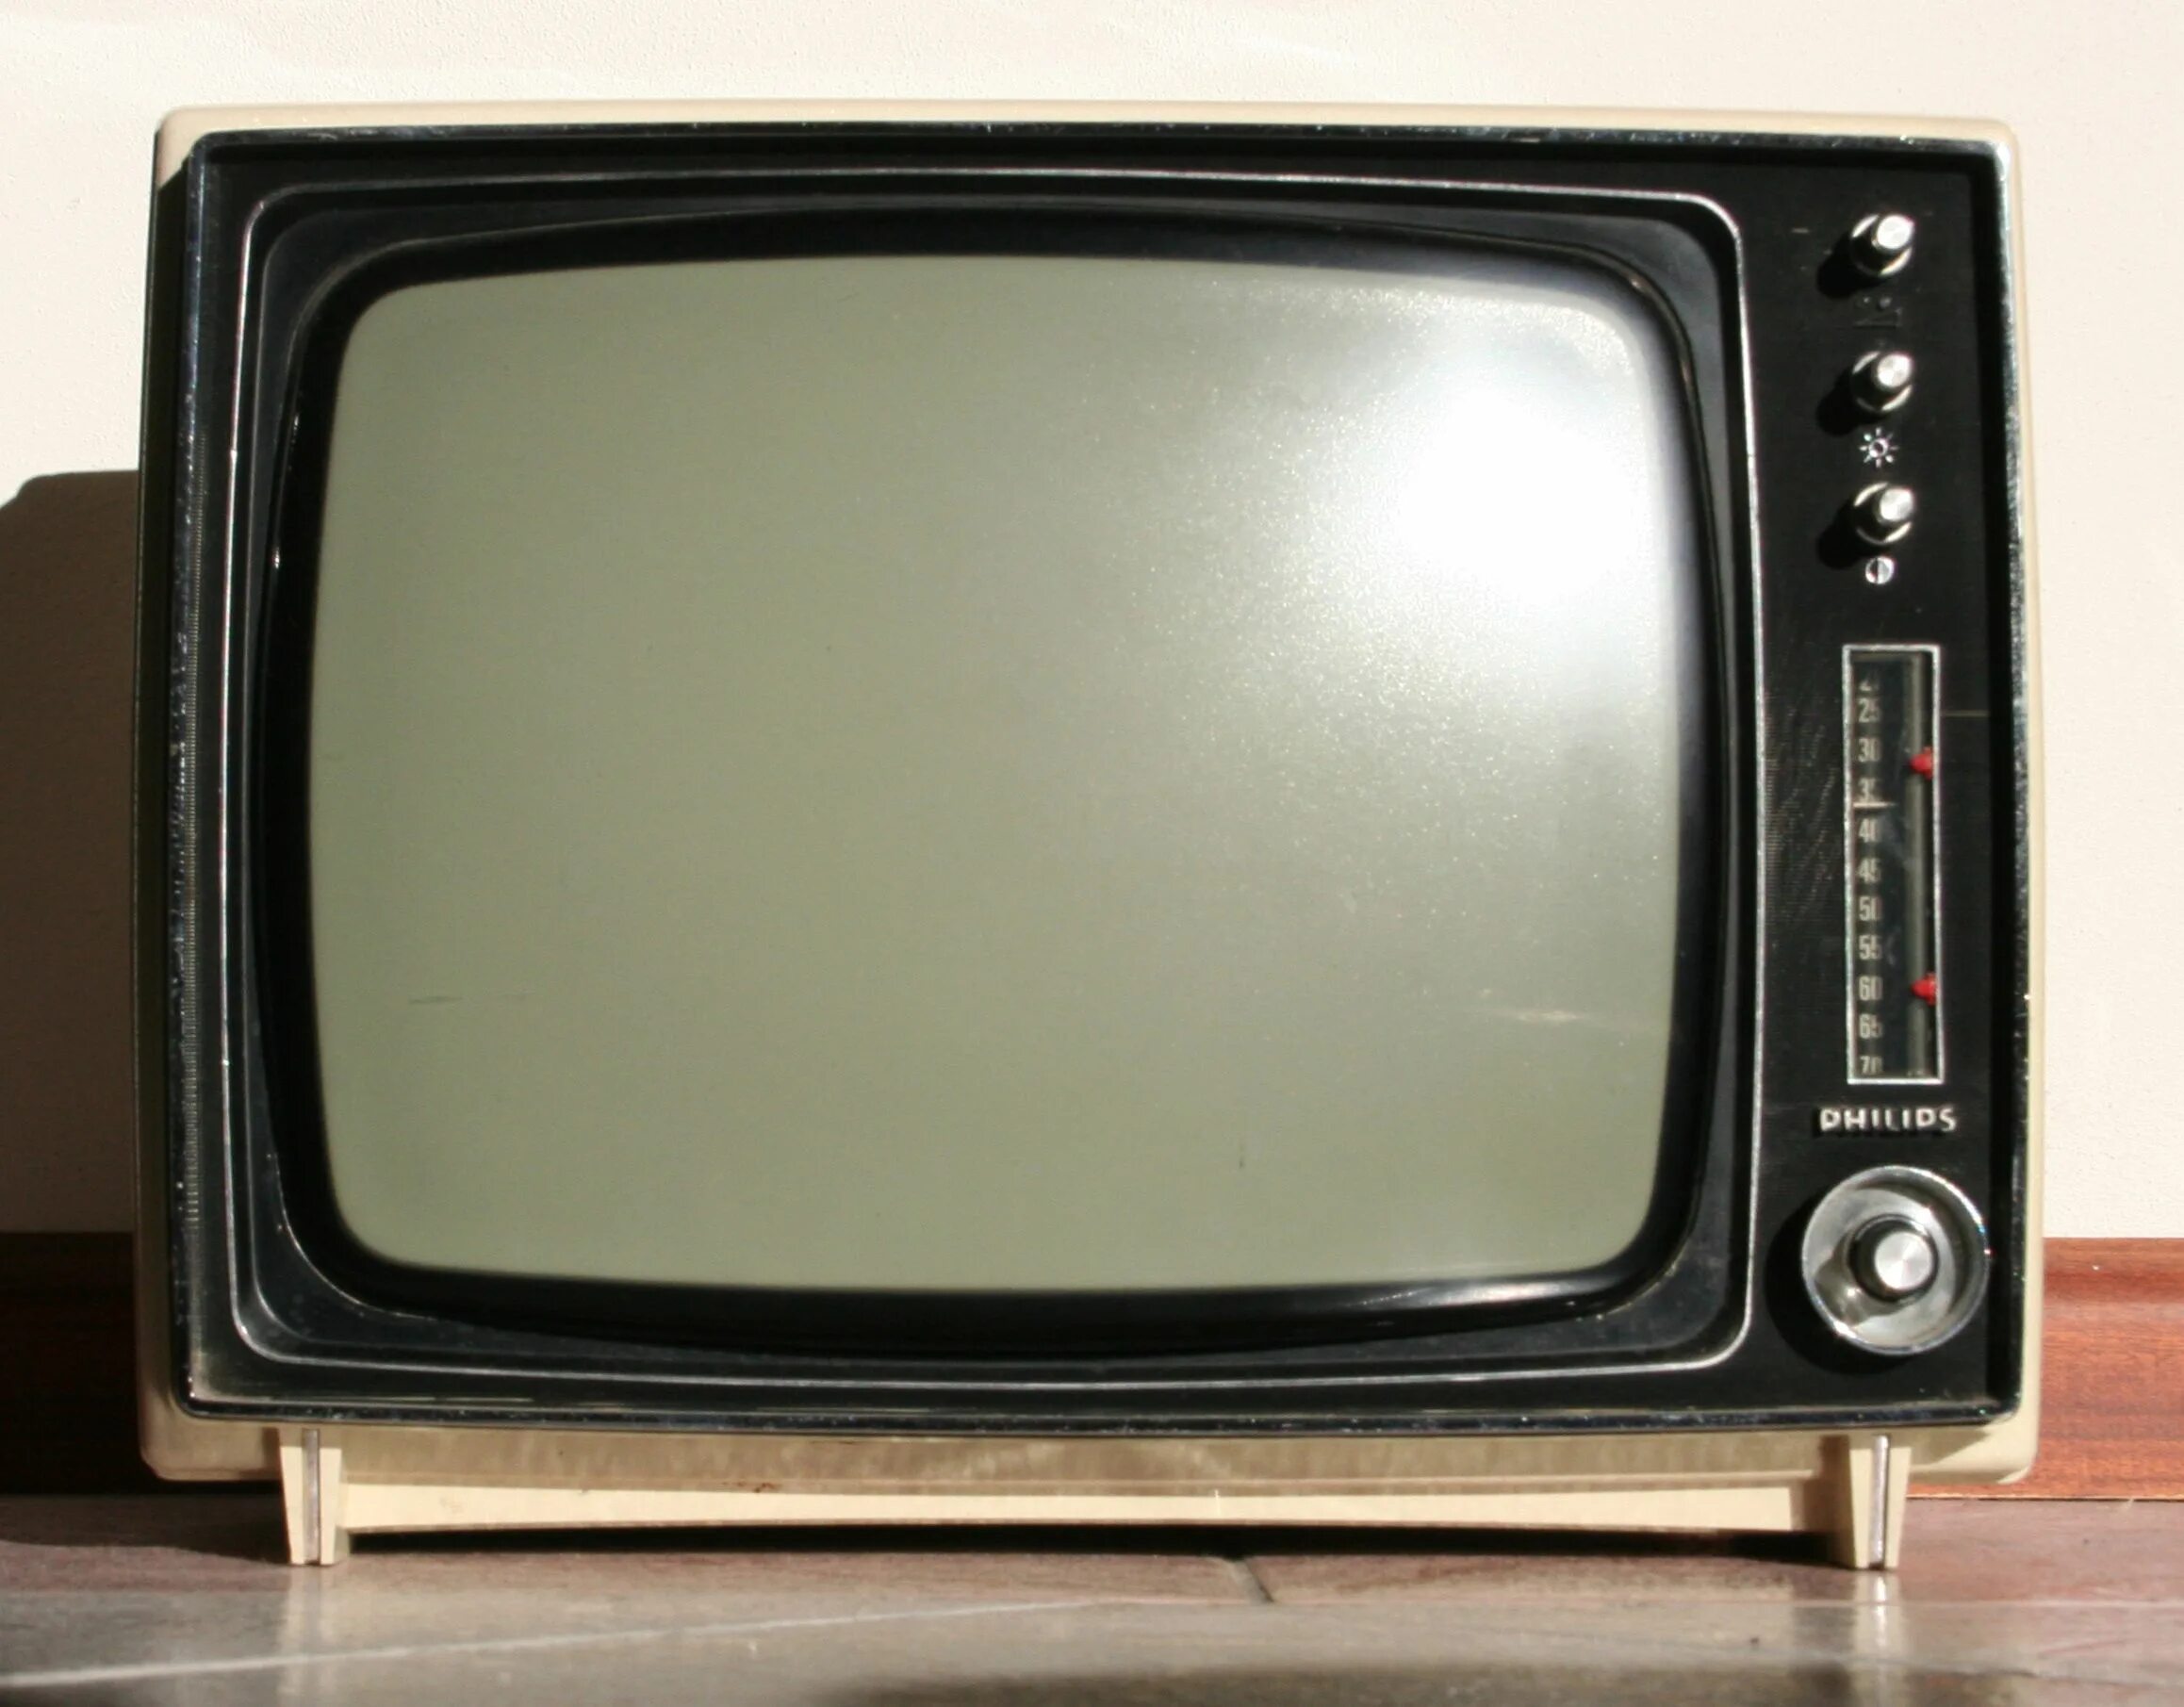 Тв для старого андроида. Телевизор янтарь 726д. Старый телевизор. Старинный телевизор. Телевизор старенький.